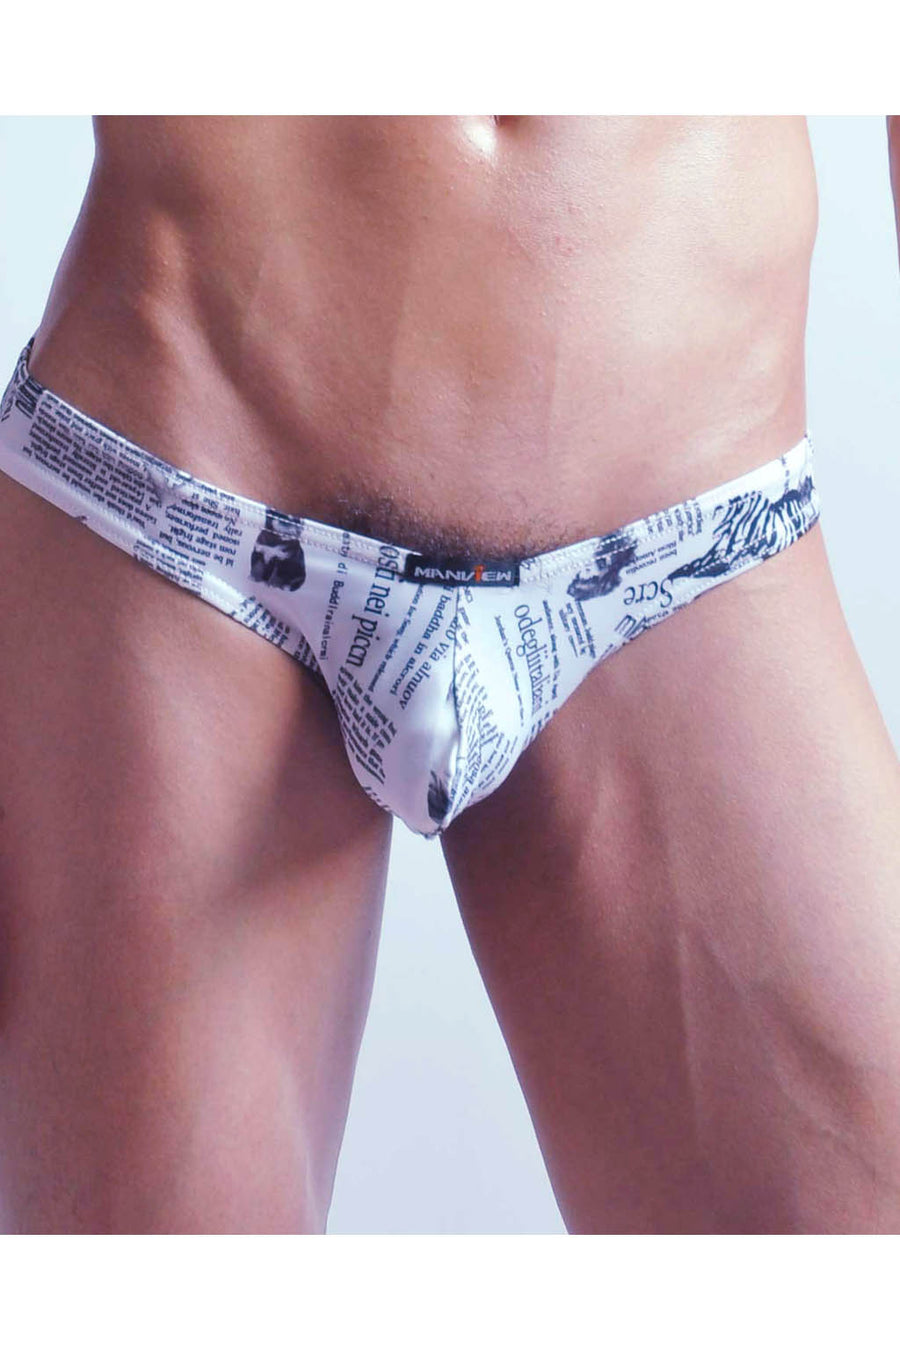 Manview Mens Cotton Pouch Booty Shorts Underwear – Bodywear for Men